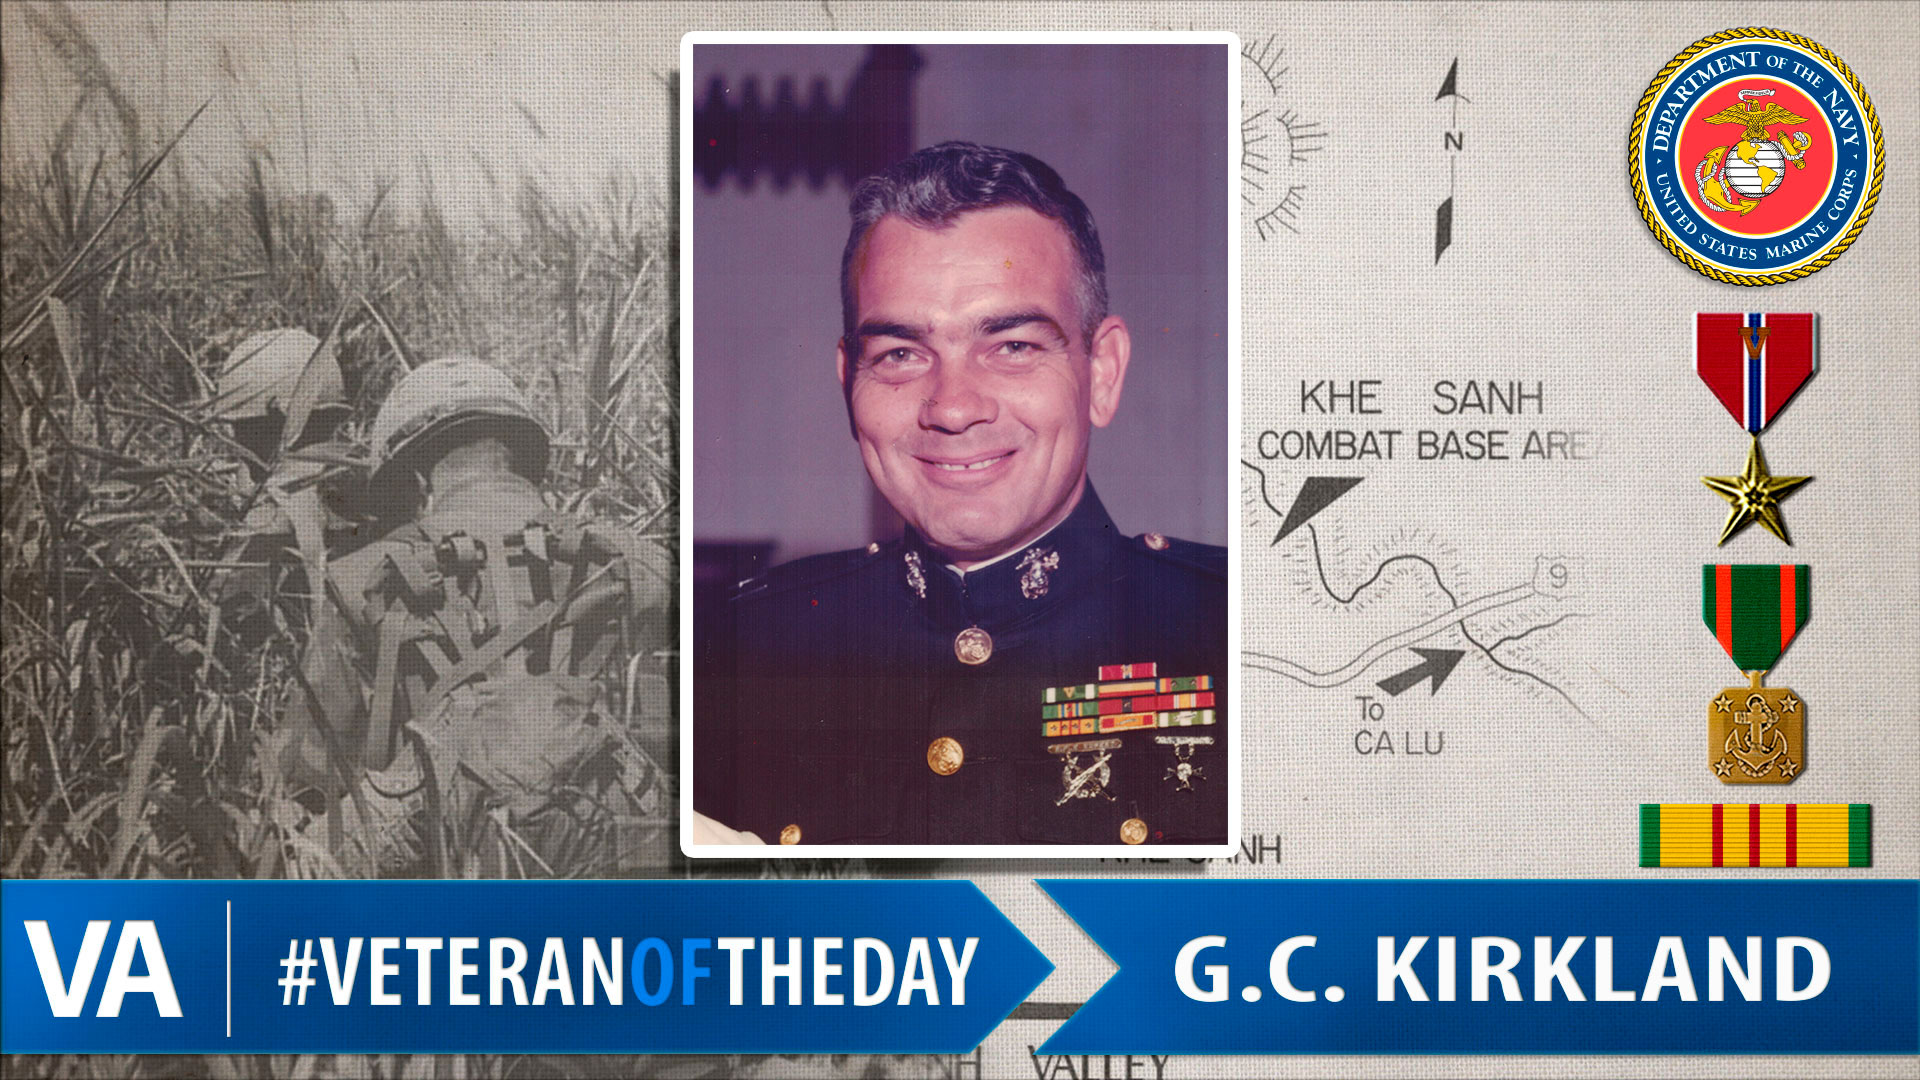 G.C. Kirkland - Veteran of the Day